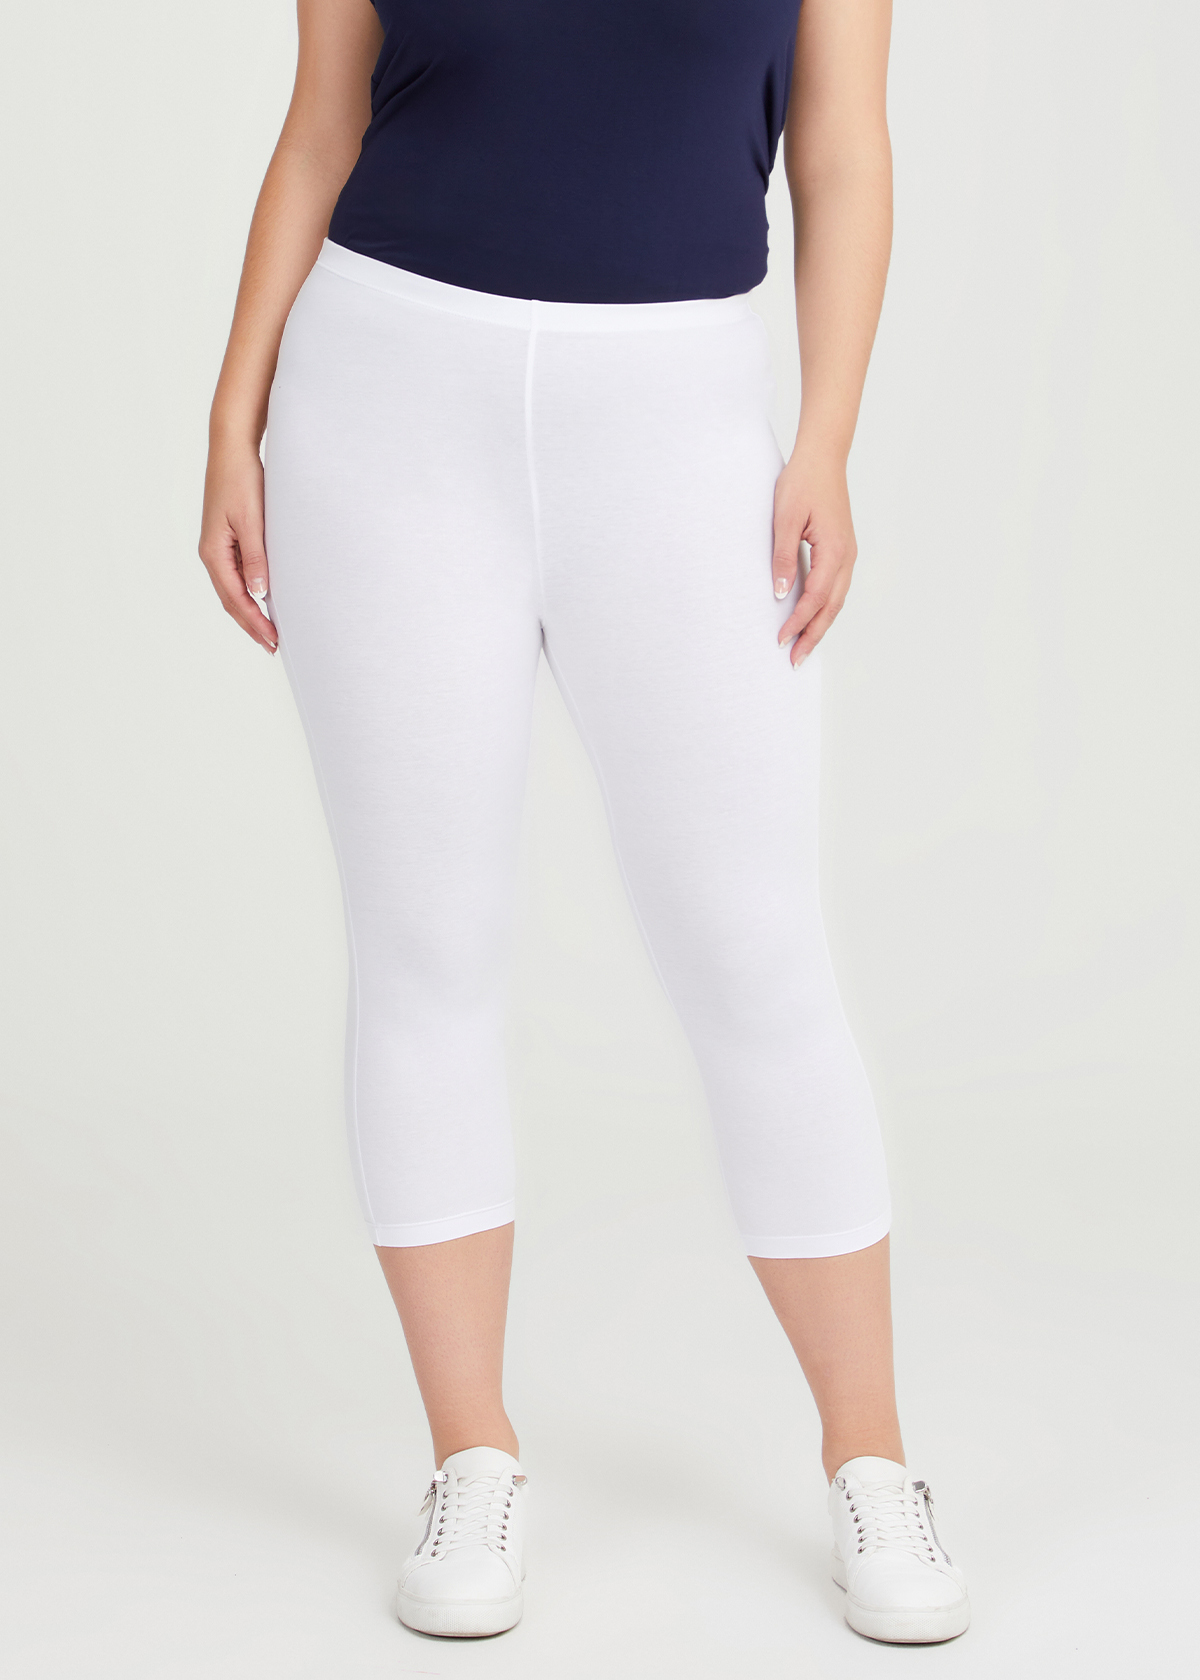 Shop Plus Size Australian Cotton Crop Legging in White